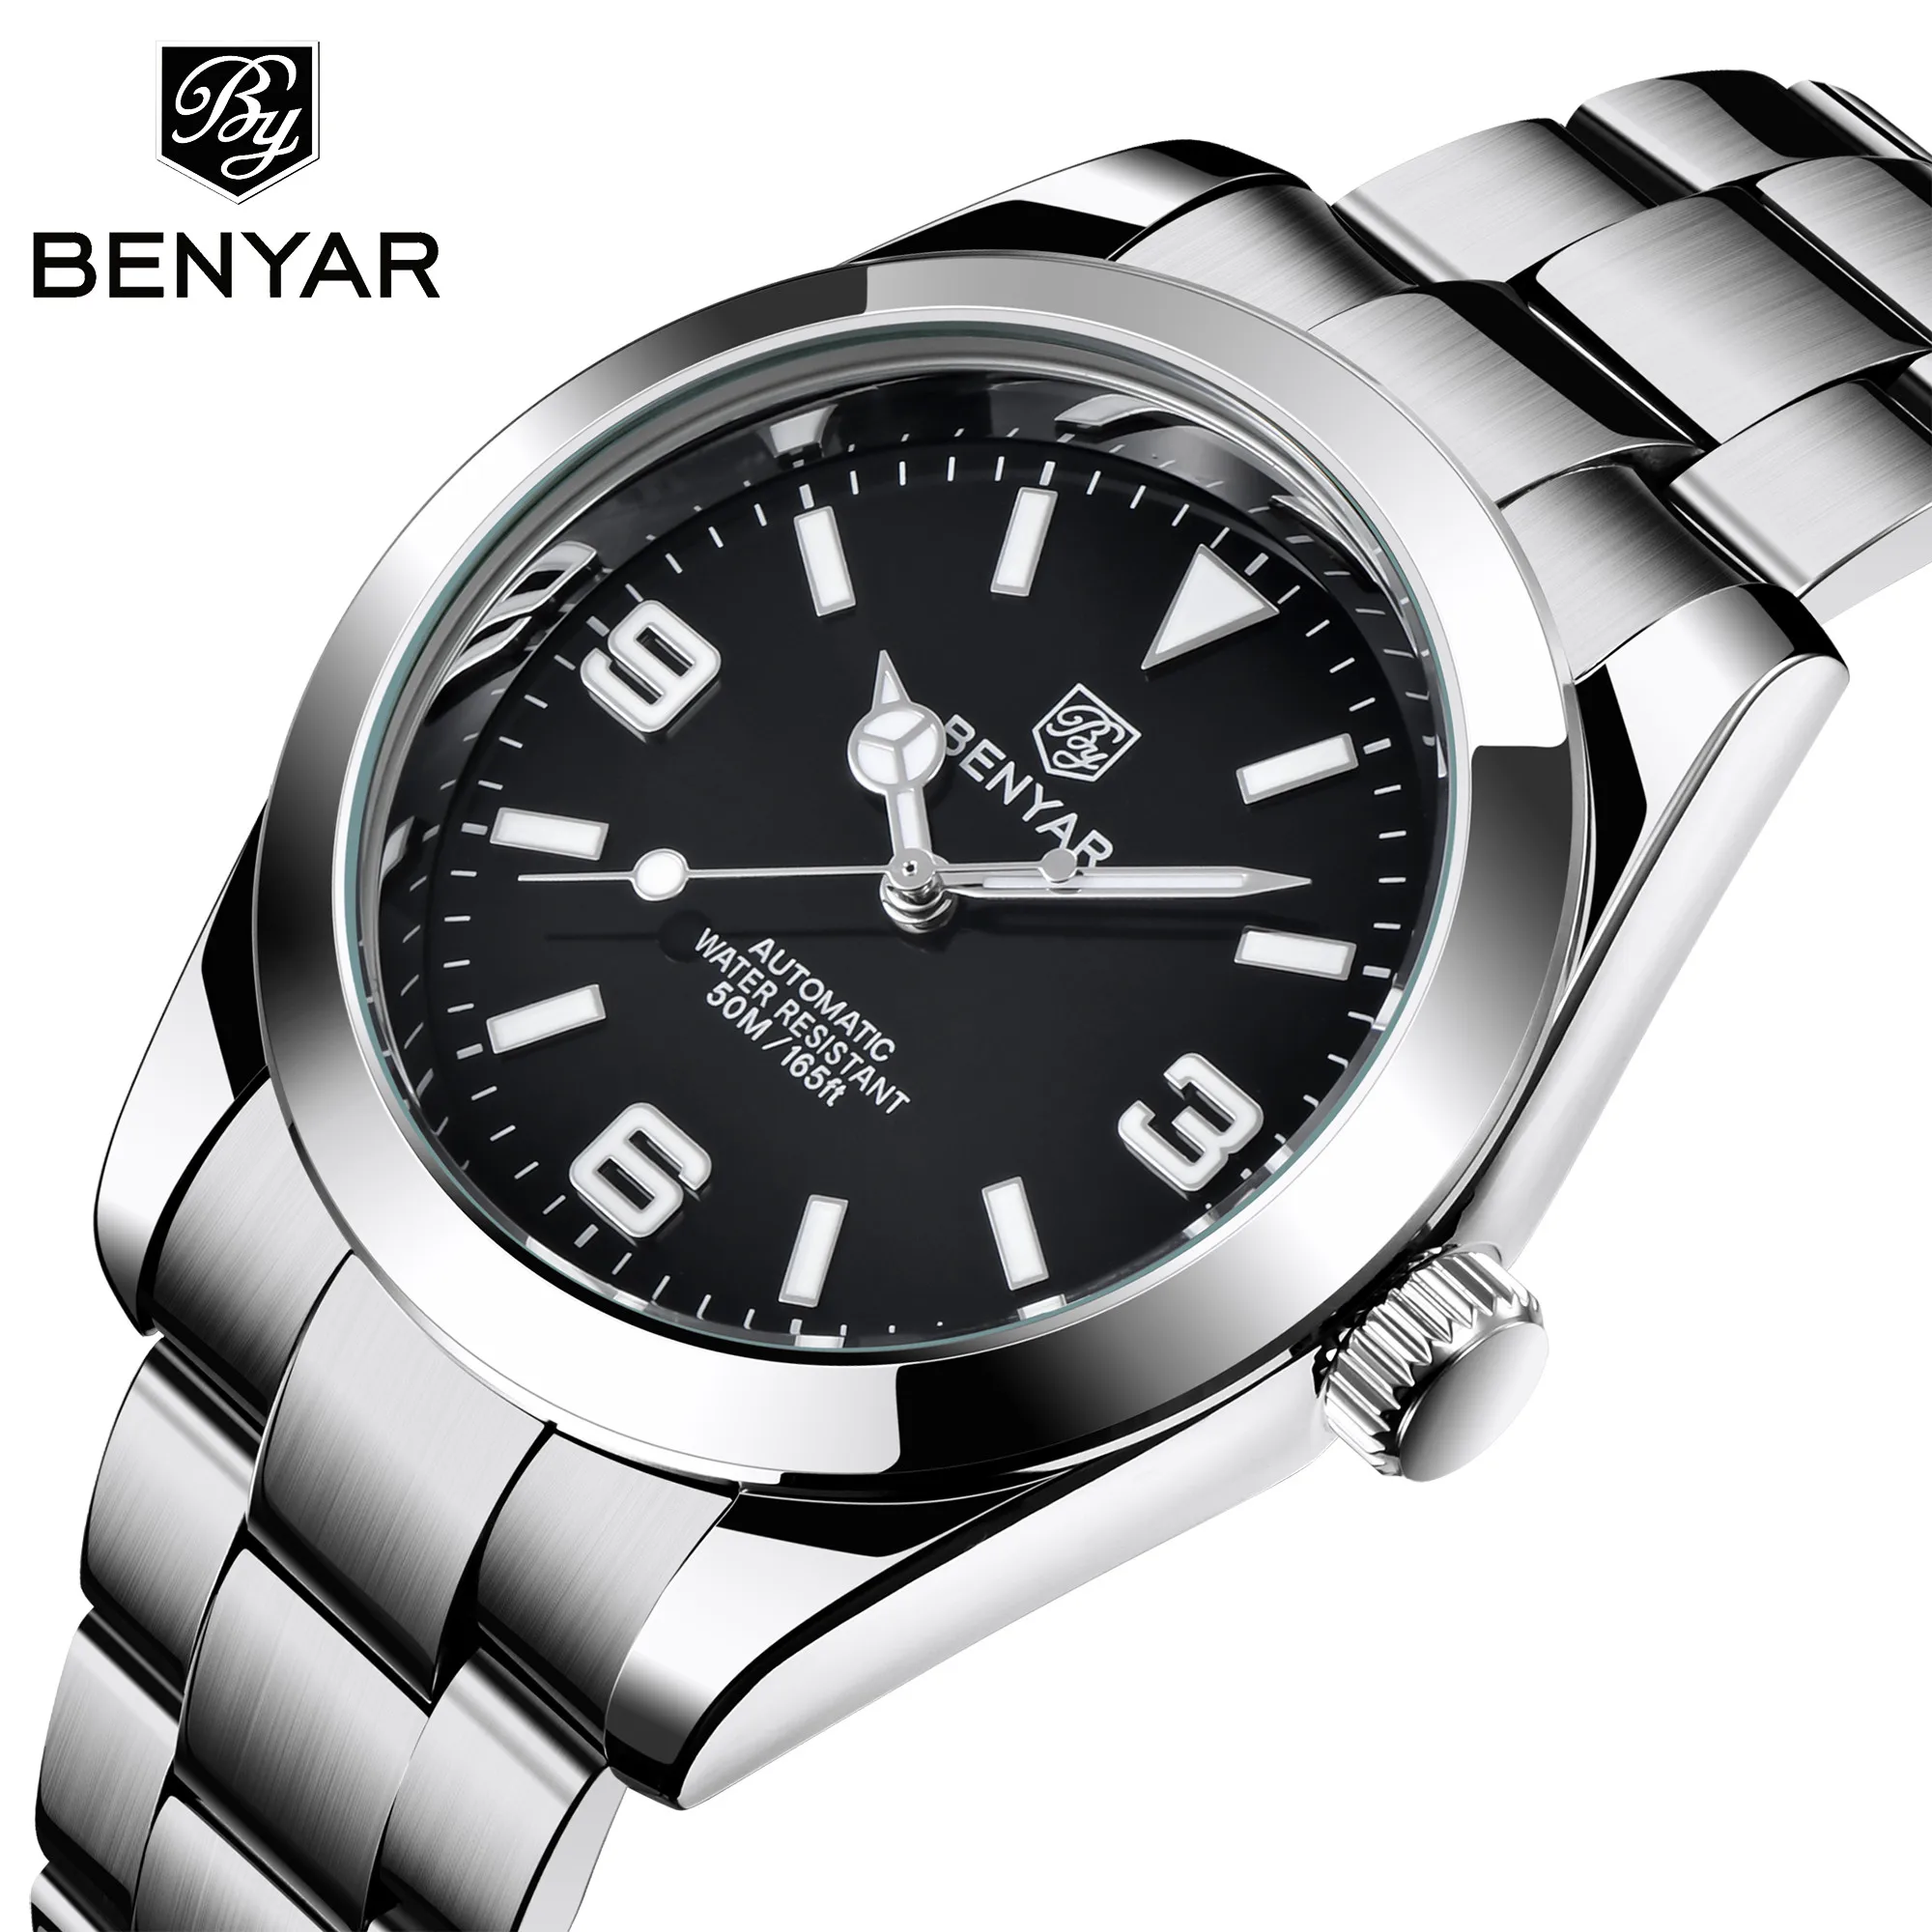 2021 new BENYAR Automatic Men’s Watches Brand Luxury Stainless Steel Wrist Watch for Men Waterproof Luminous Business Wristwatch